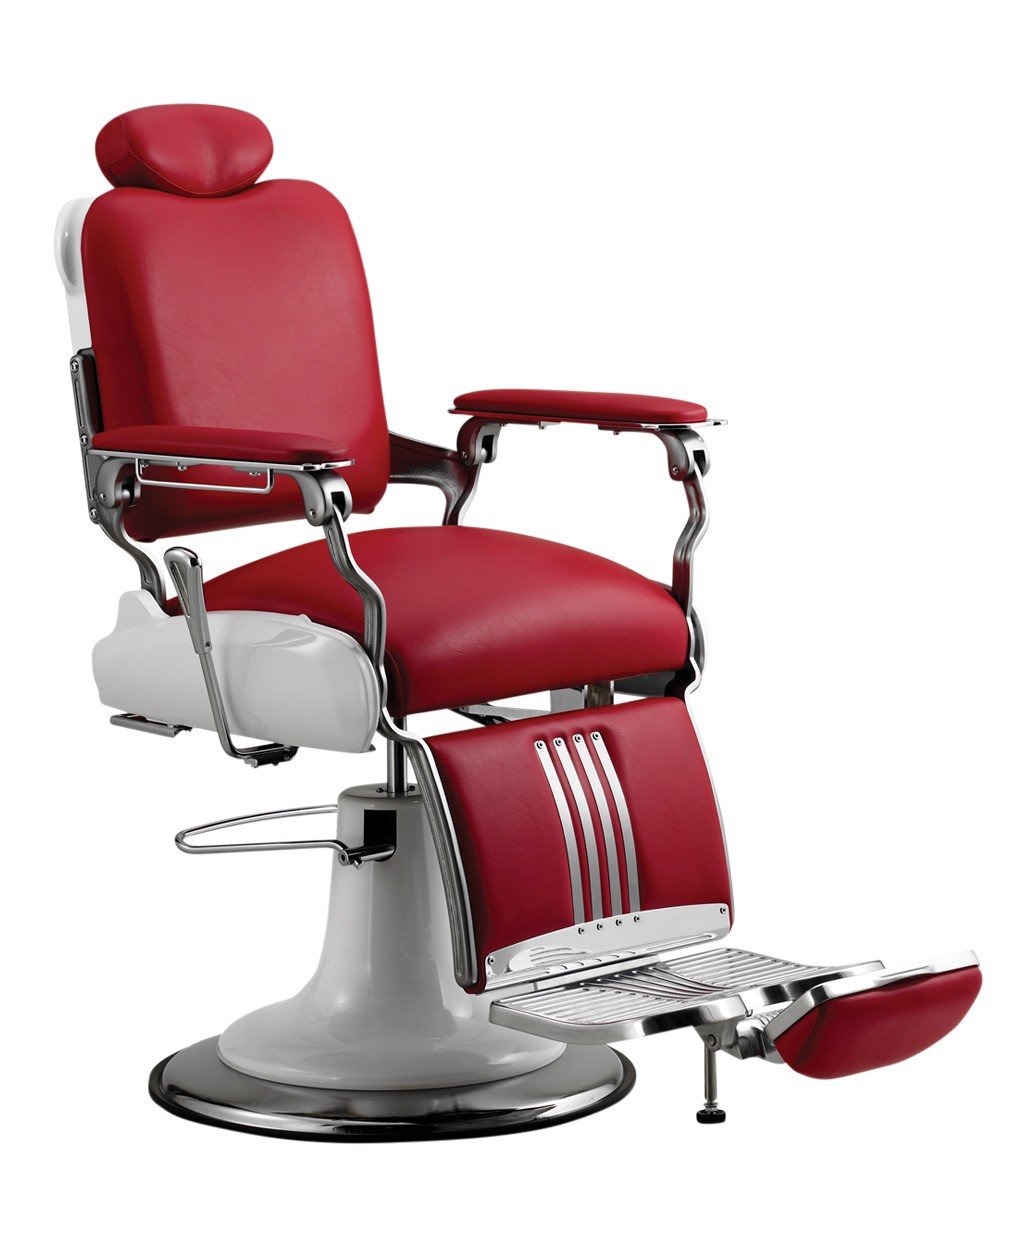 Takara Belmont Koken Legacy Red & Black Barber Chairs